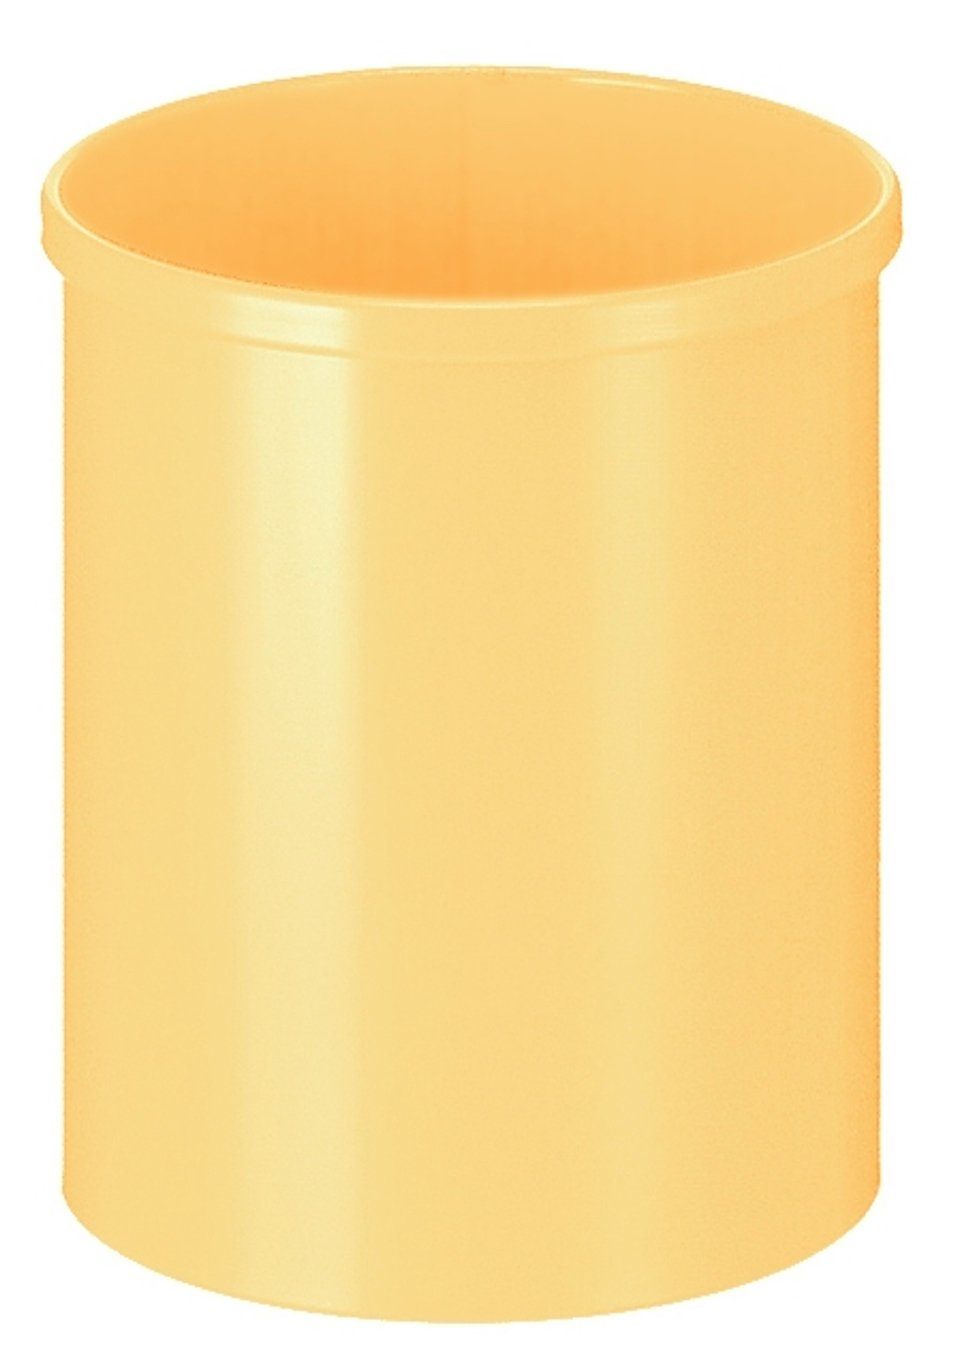  Grau Gelb runder PROREGAL® HxØ Metall Stillvoller 30,5x25,5cm, Papierkorb 15L Papierkorb,